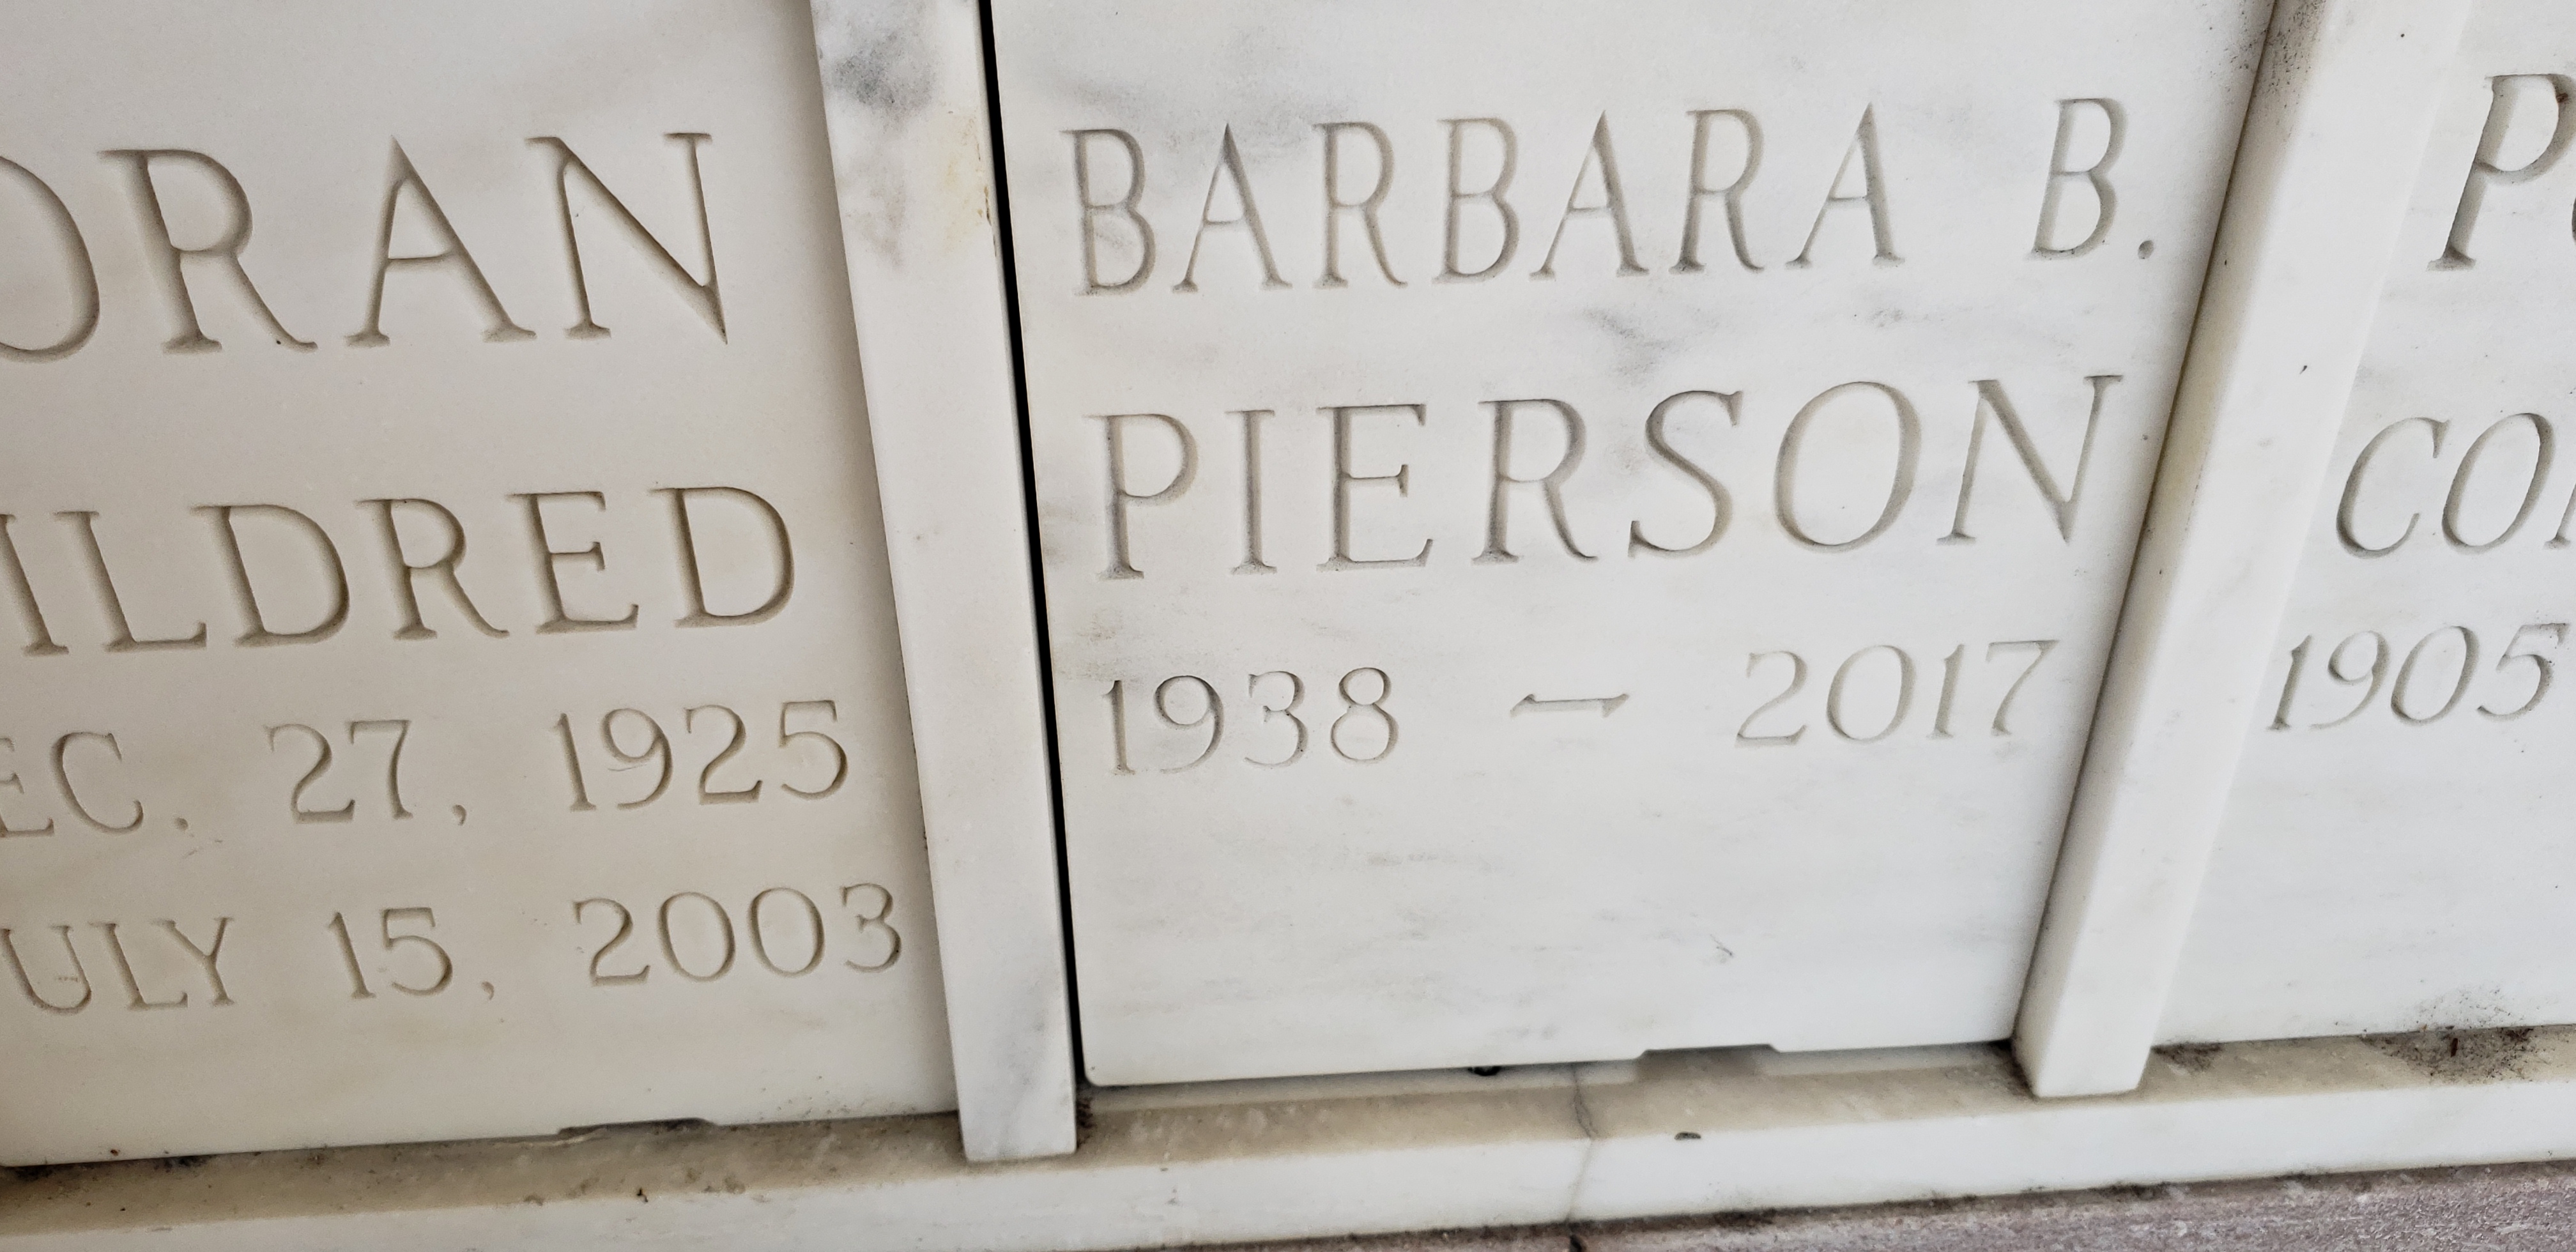 Barbara B Pierson